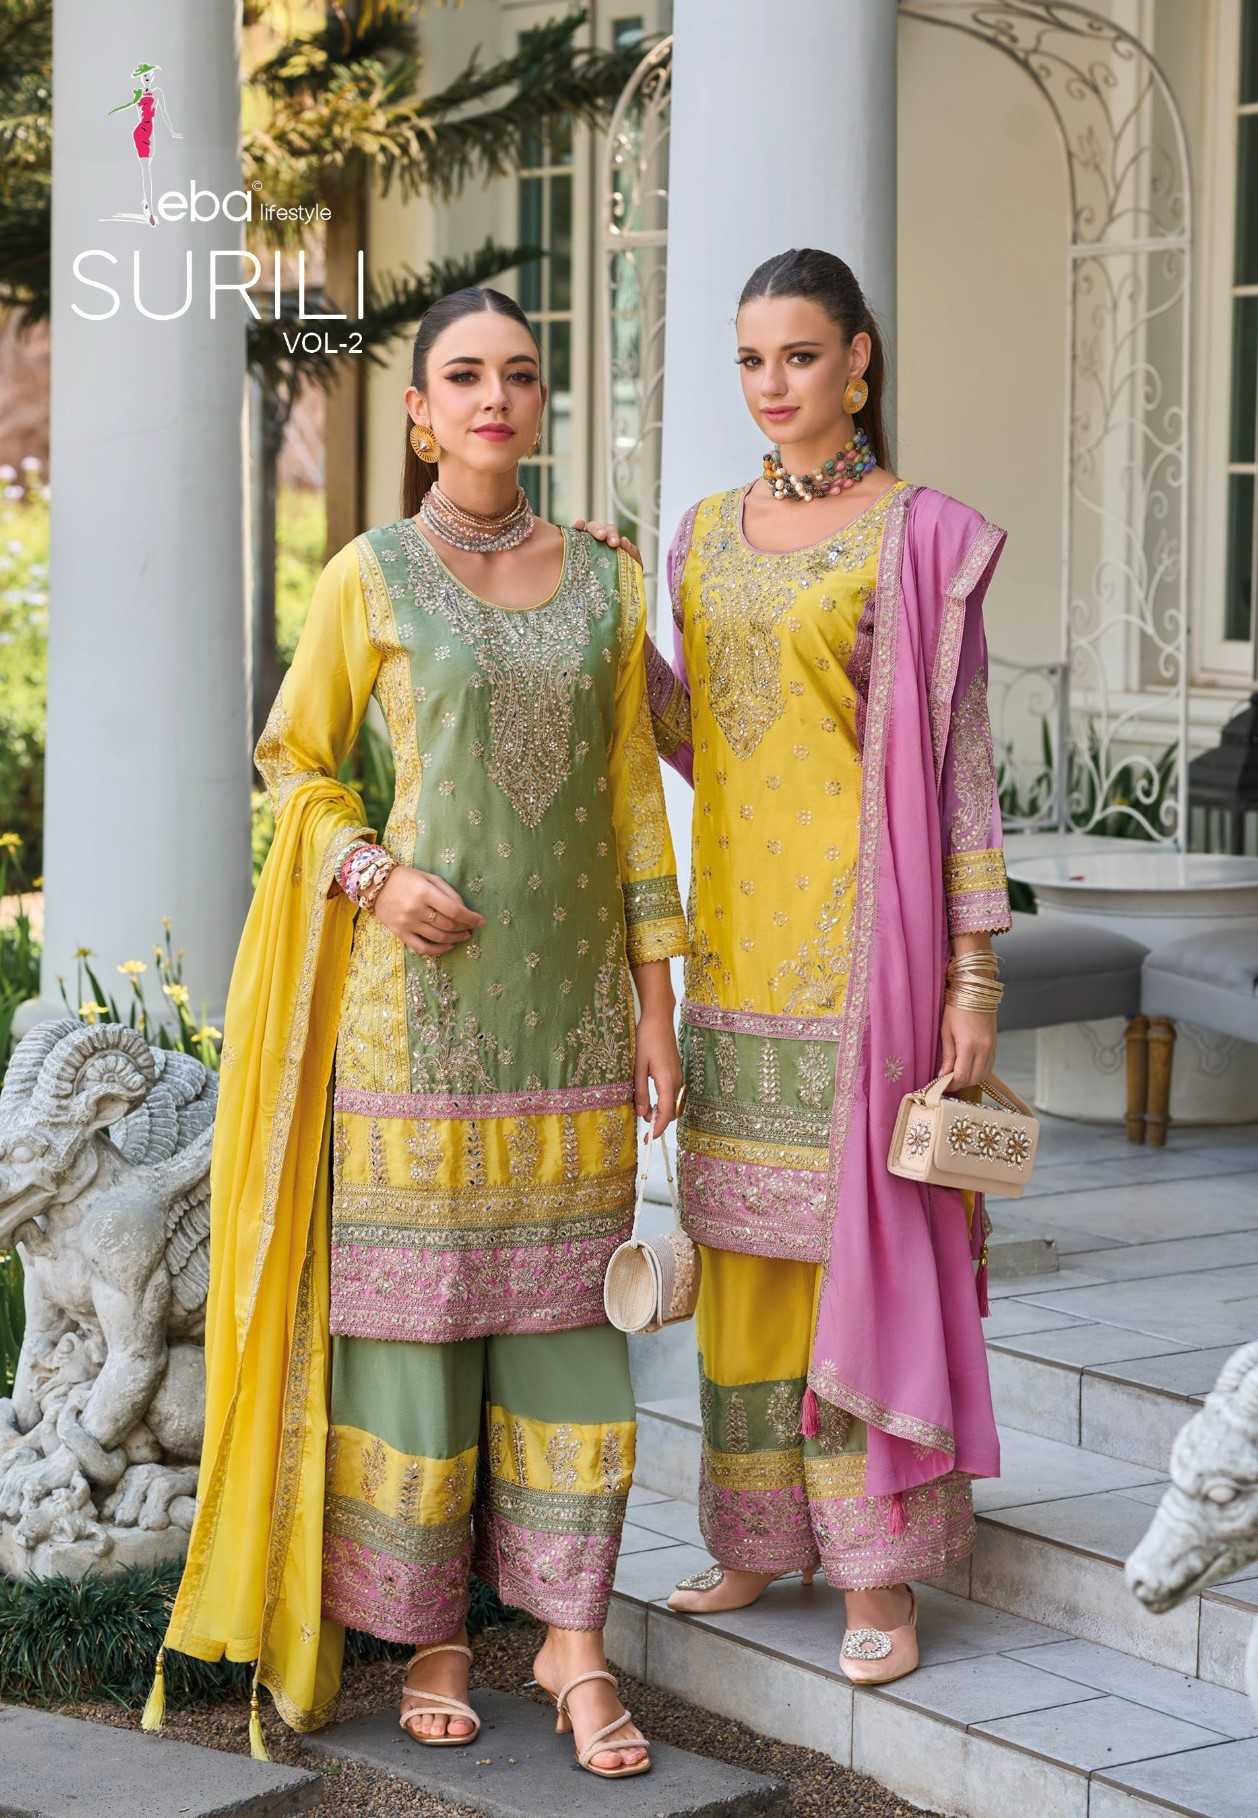 eba lifestyle surili vol 2 readymade wedding wear embroidery work designer salwar kameez